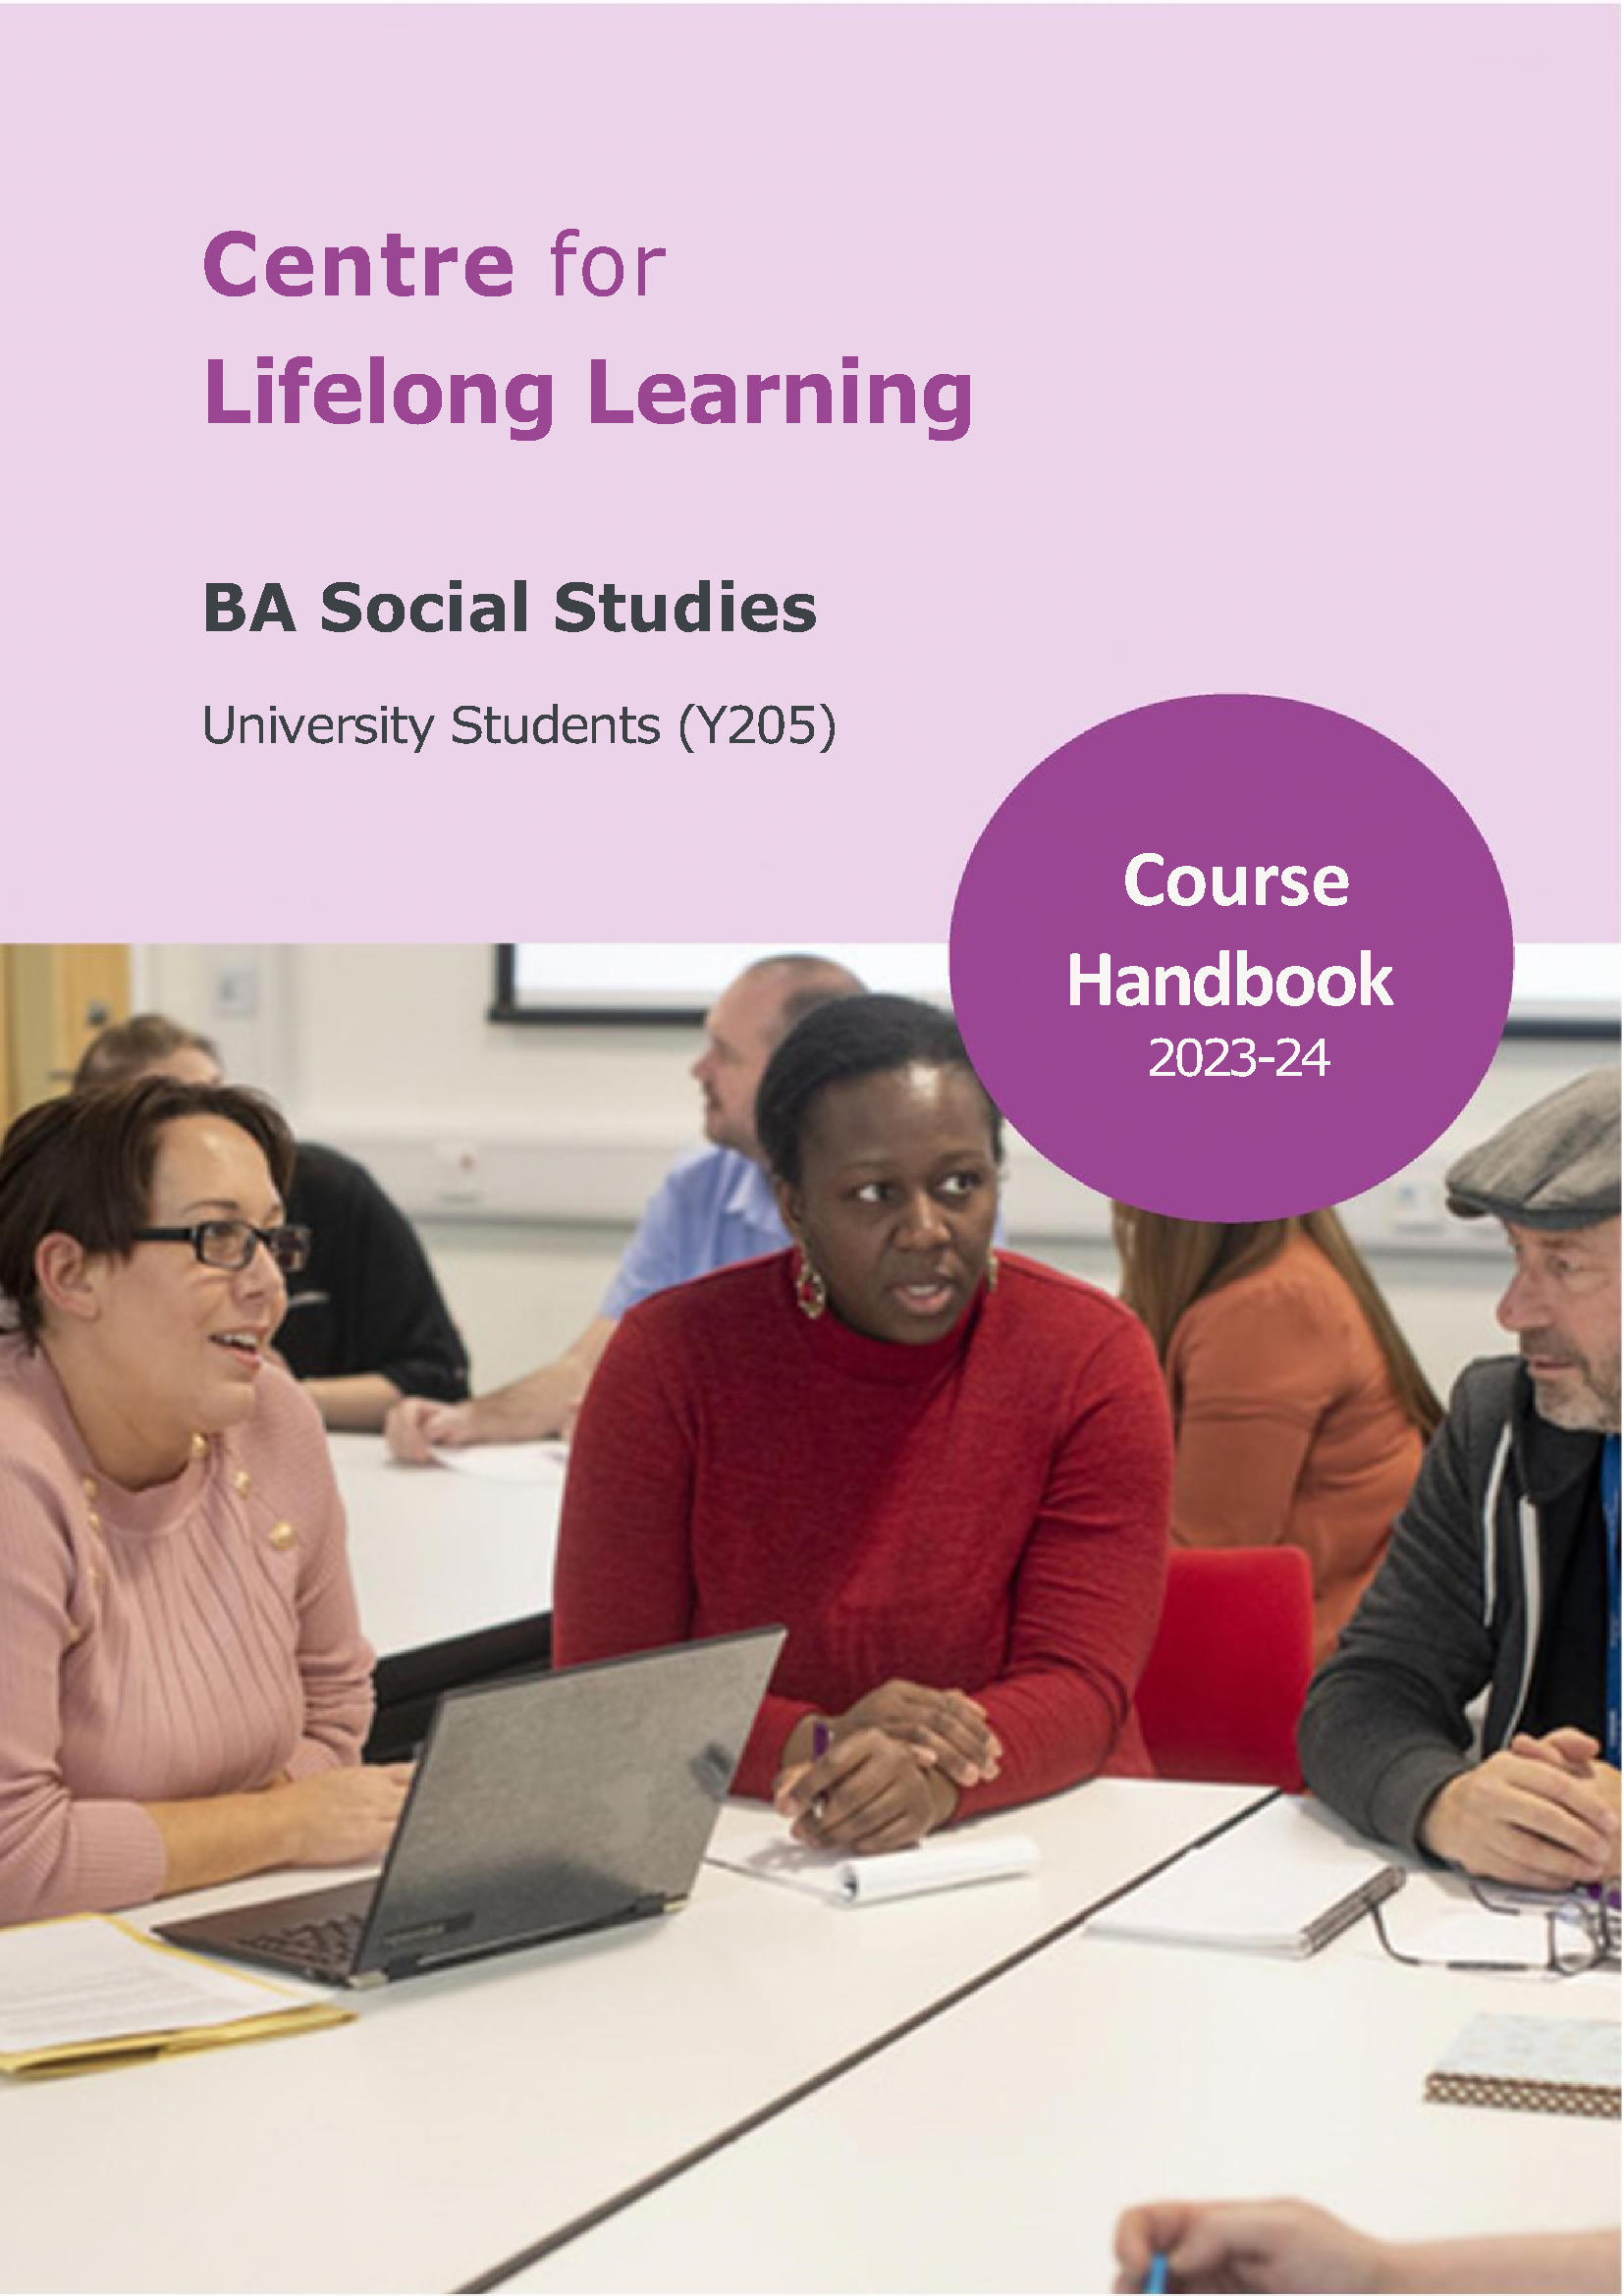 BA Social Studies Handbook, Front Cover